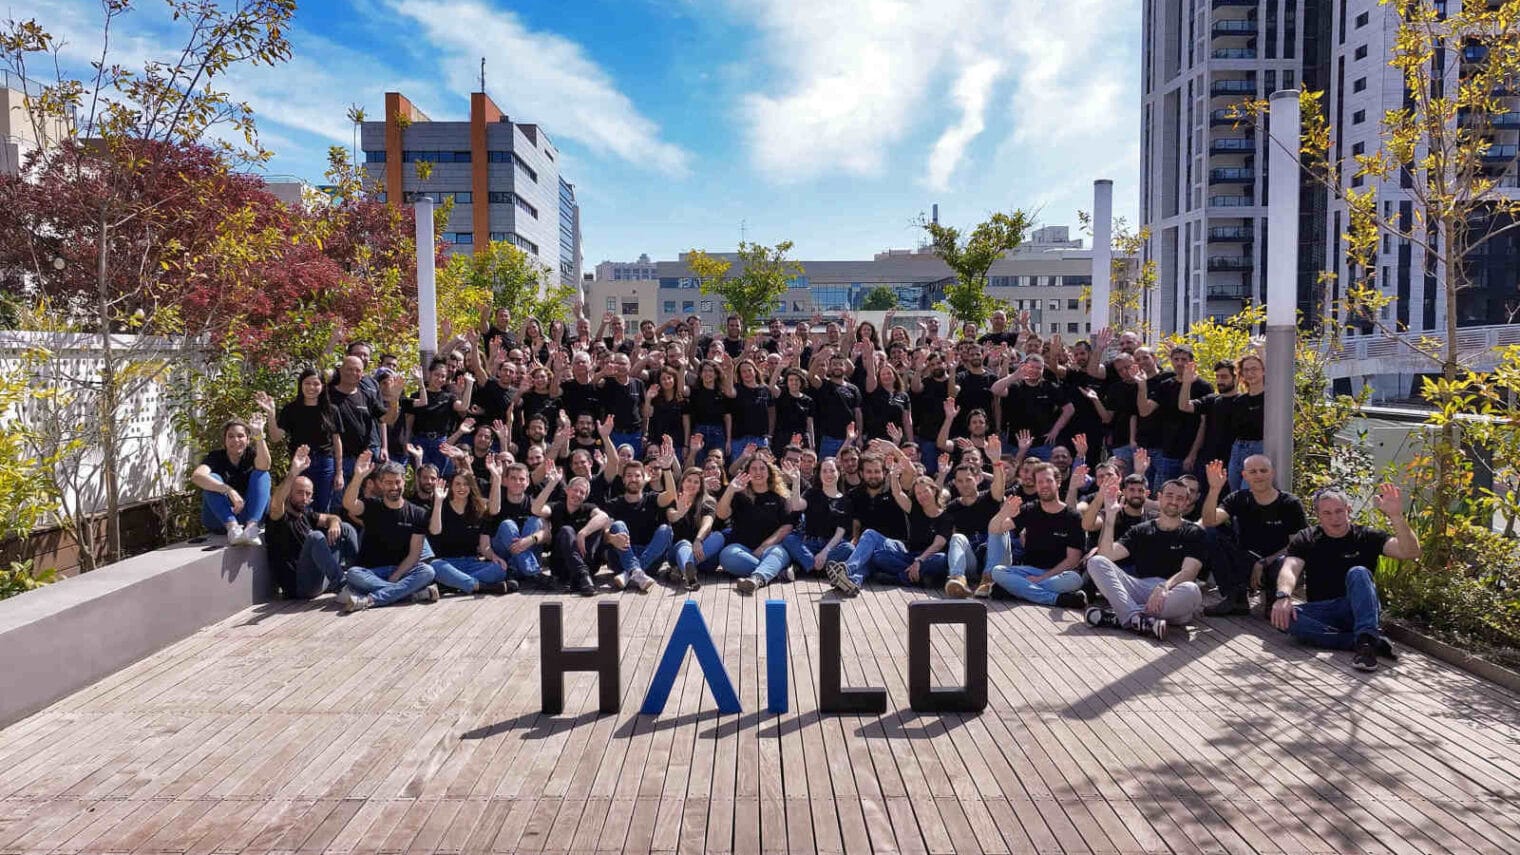 The Hailo team. Photo courtesy of Hailo.